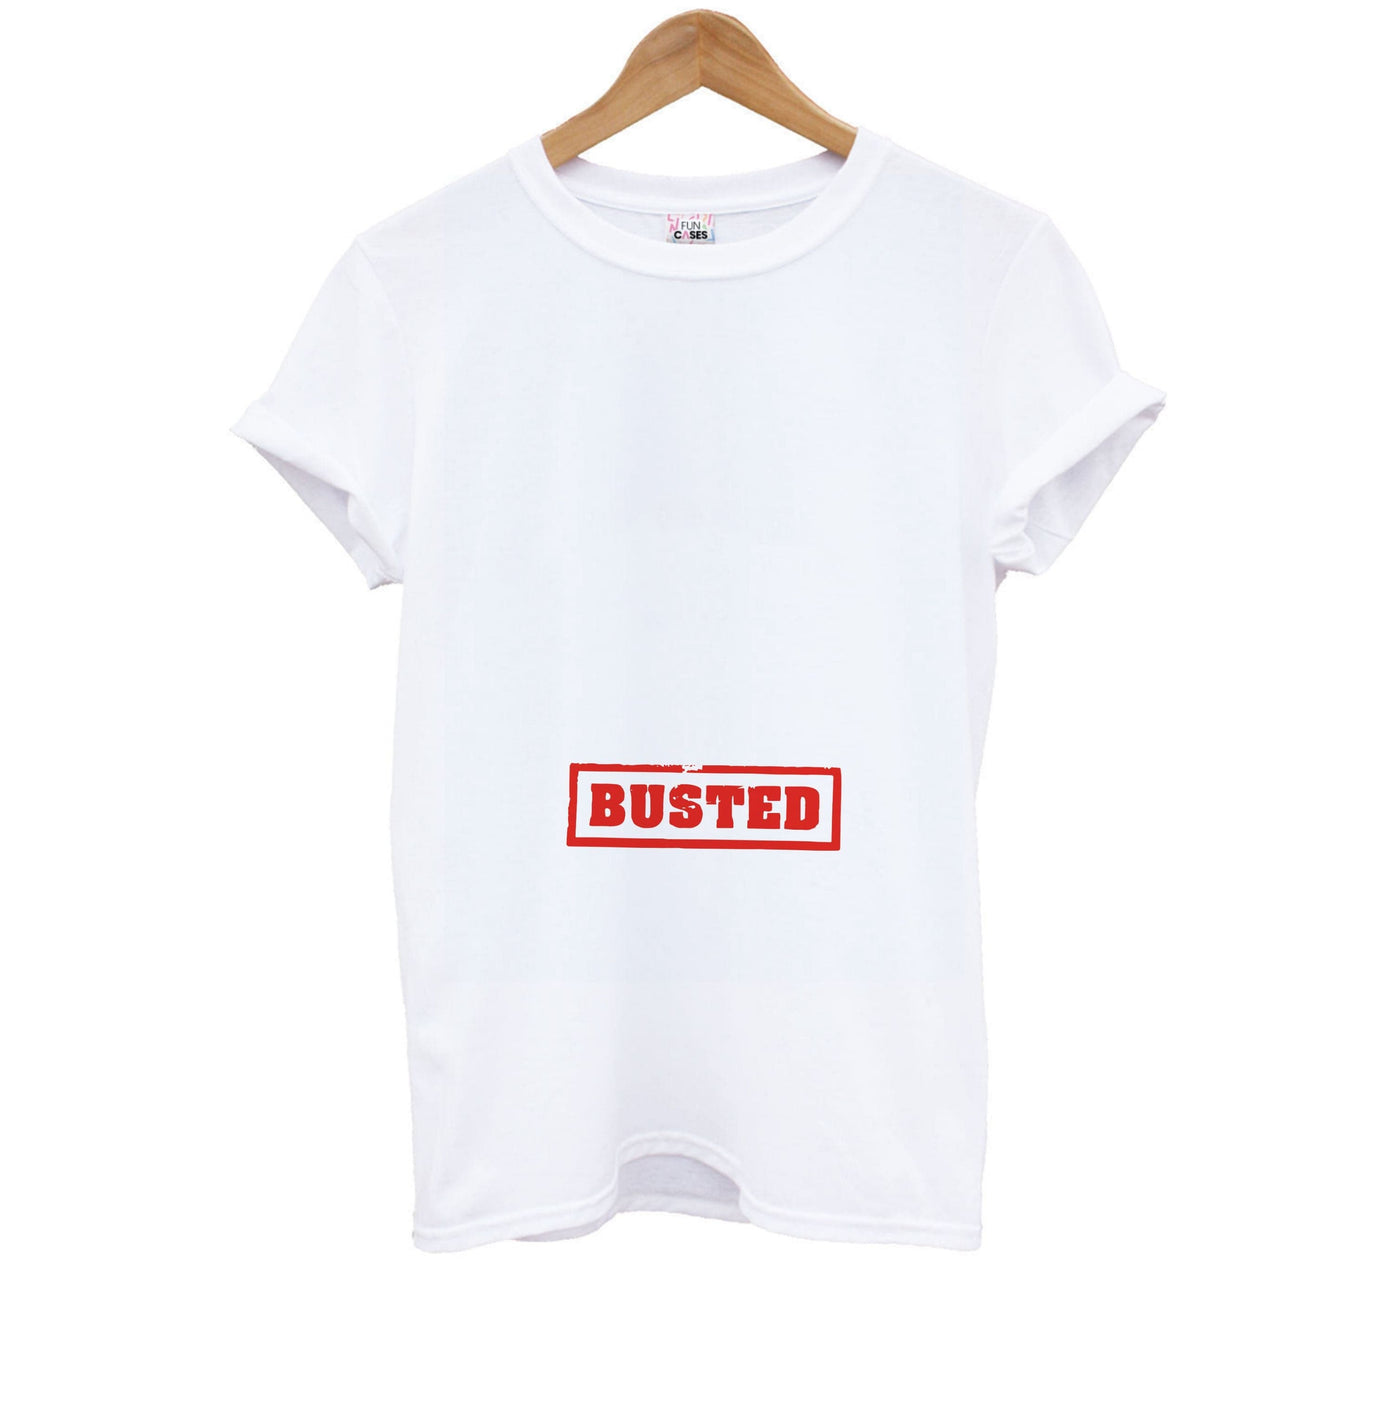 Band Logo - Busted Kids T-Shirt